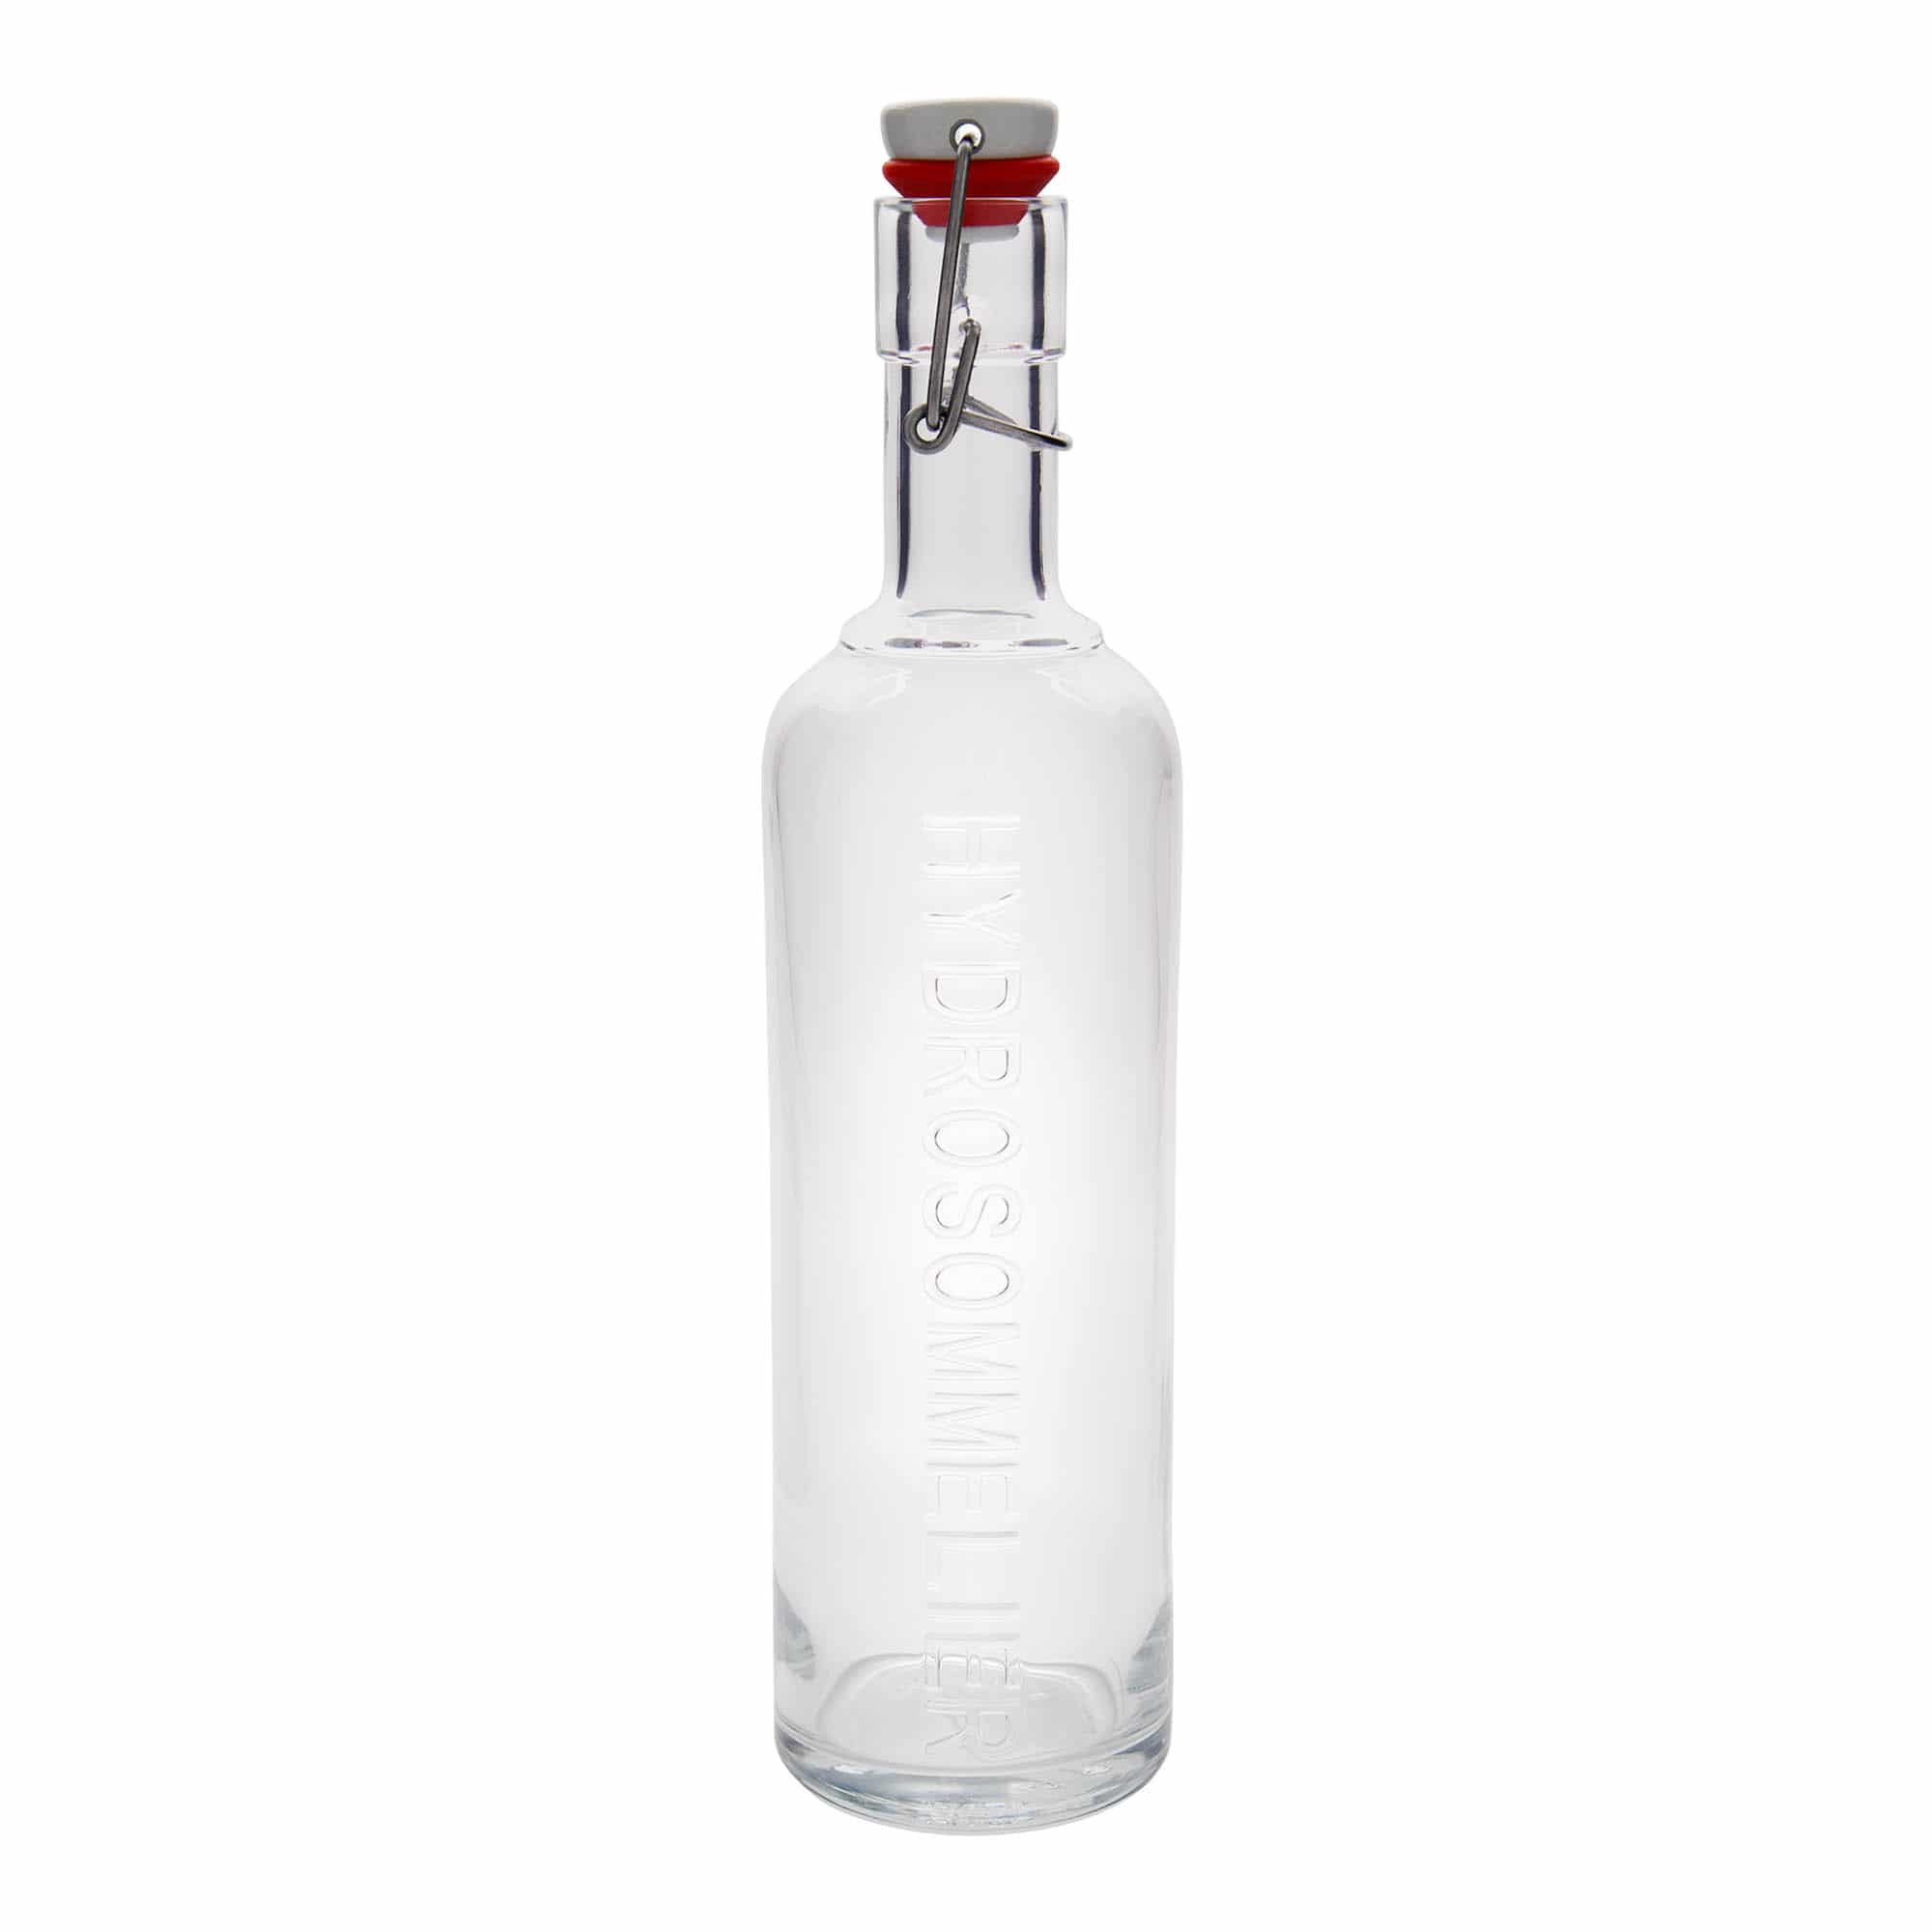 1,000 ml glass bottle 'Optima Hydrosommelier', closure: swing top